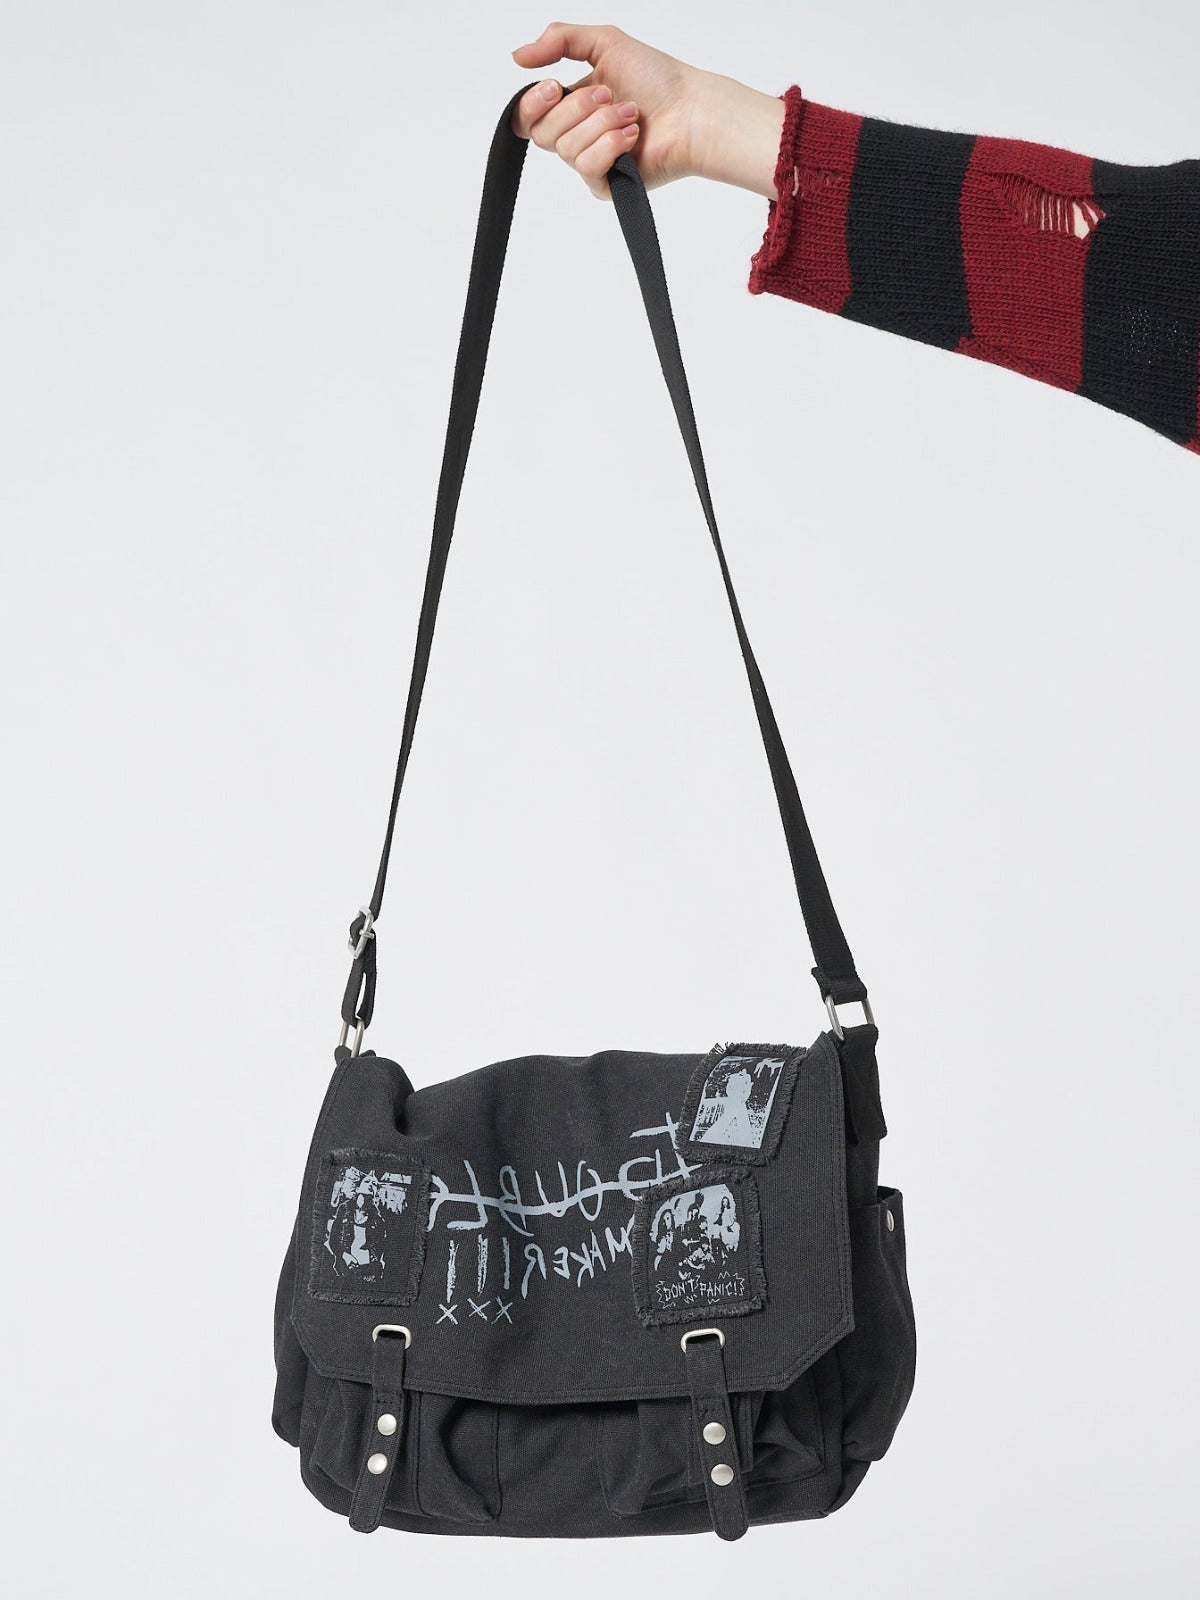 Made by Minga Women's Woven Crossbody Bag